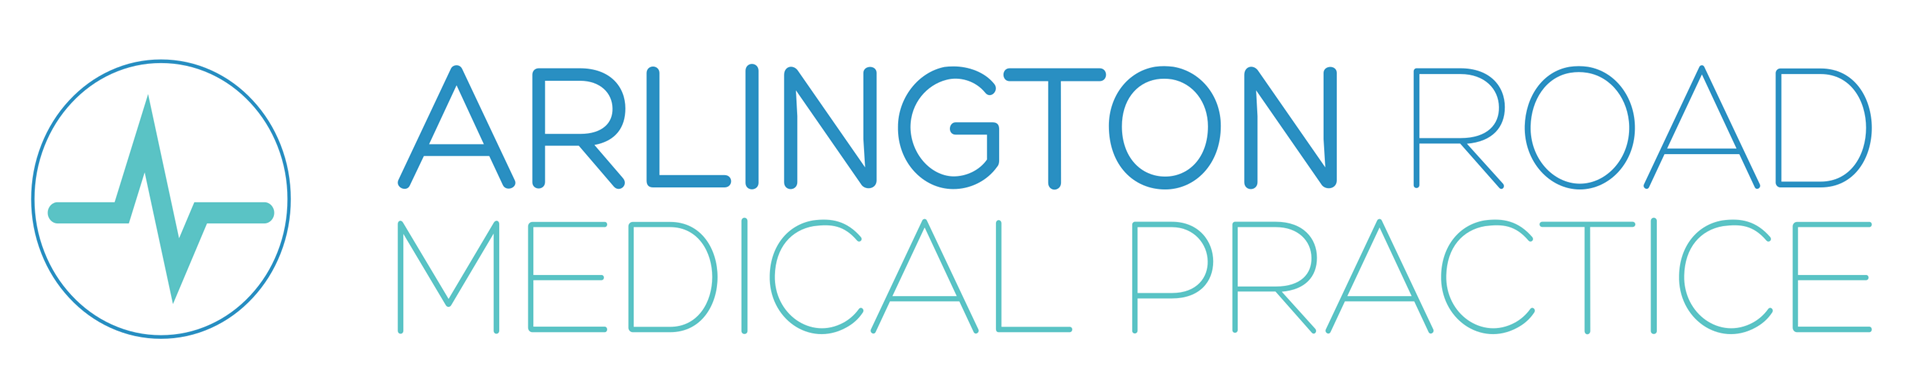 Arlington Road Medical Practice Logo